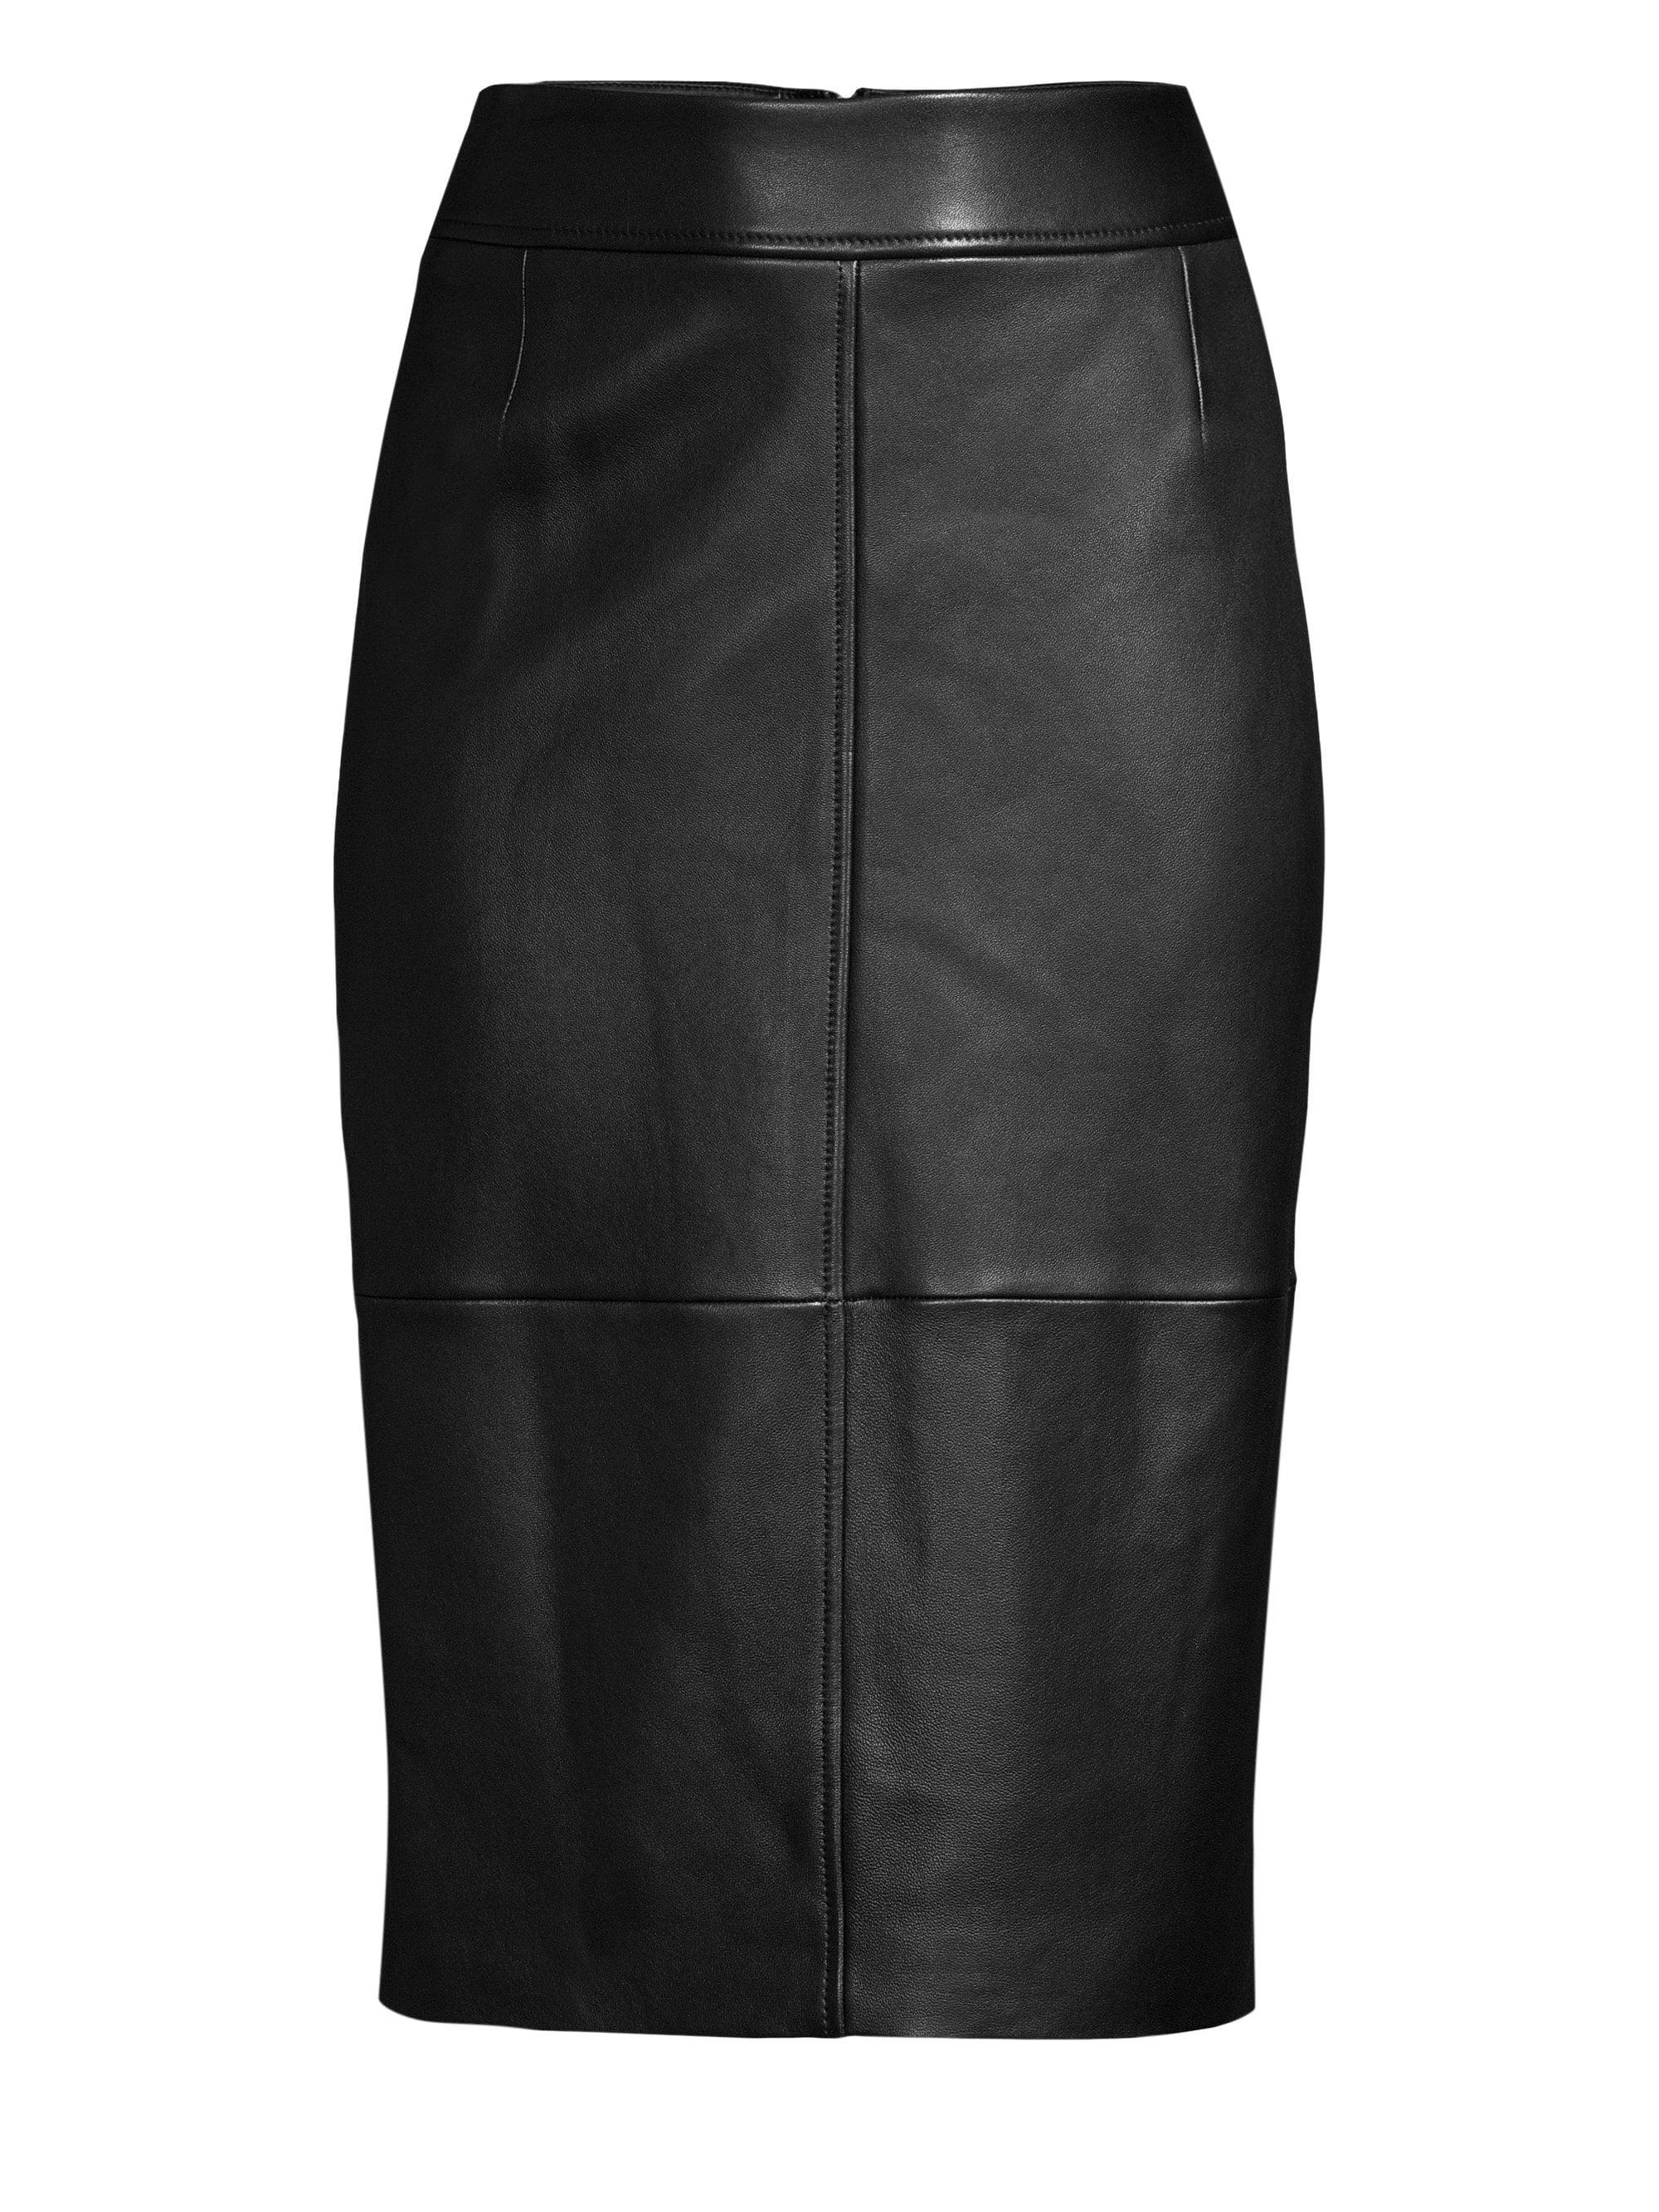 hugo boss leather skirt price